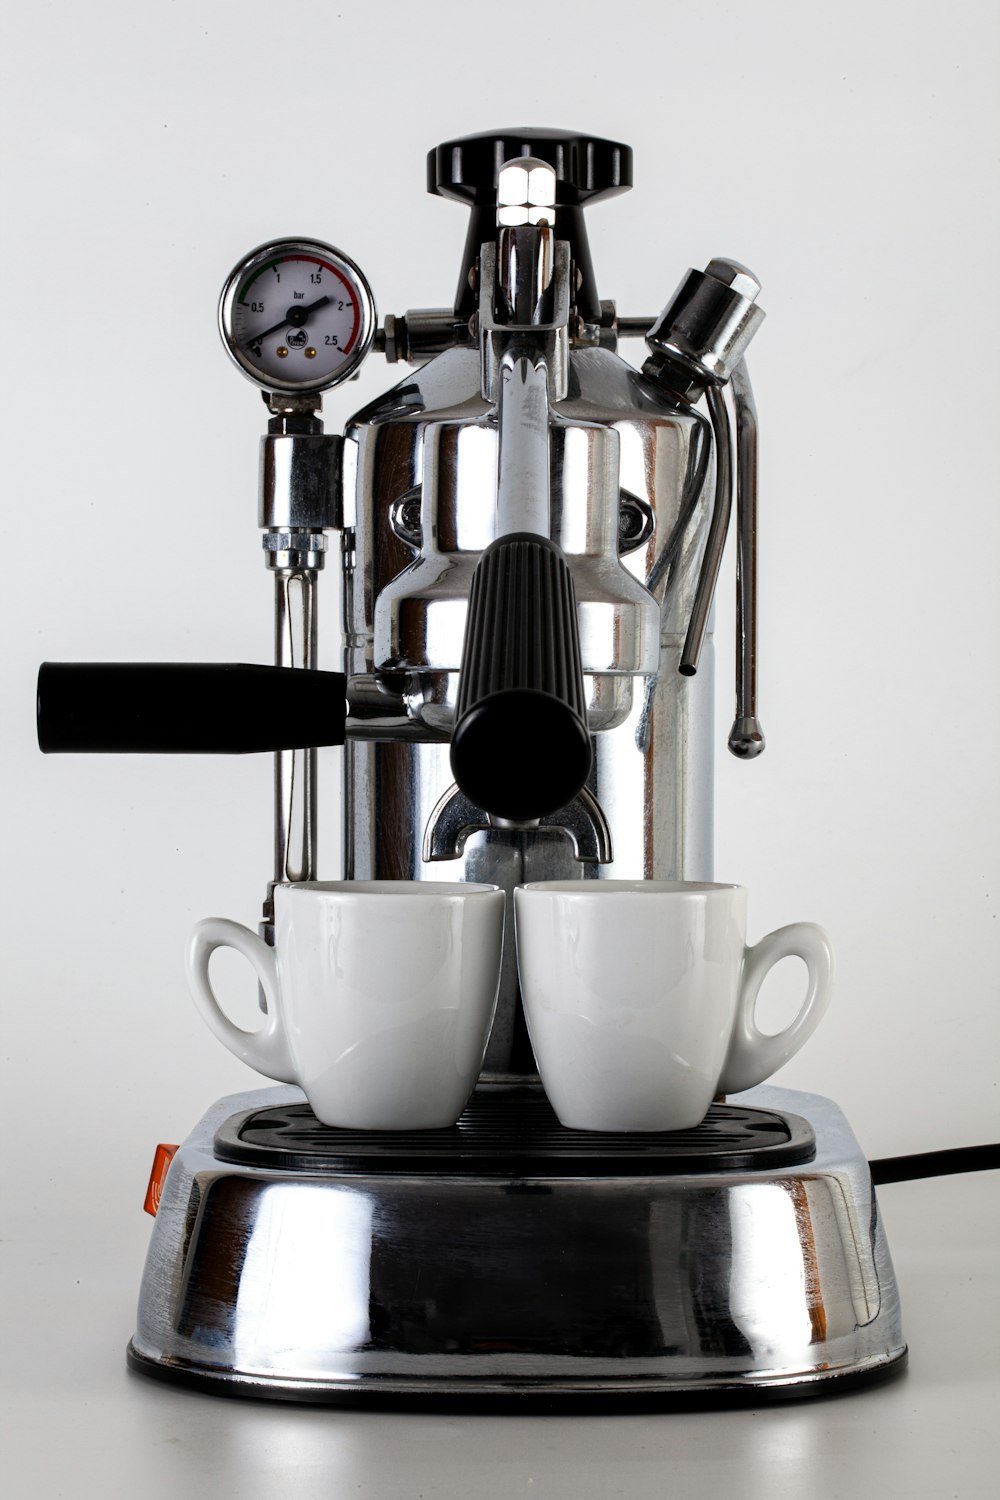 white ceramic teacup on stainless steel espresso machine